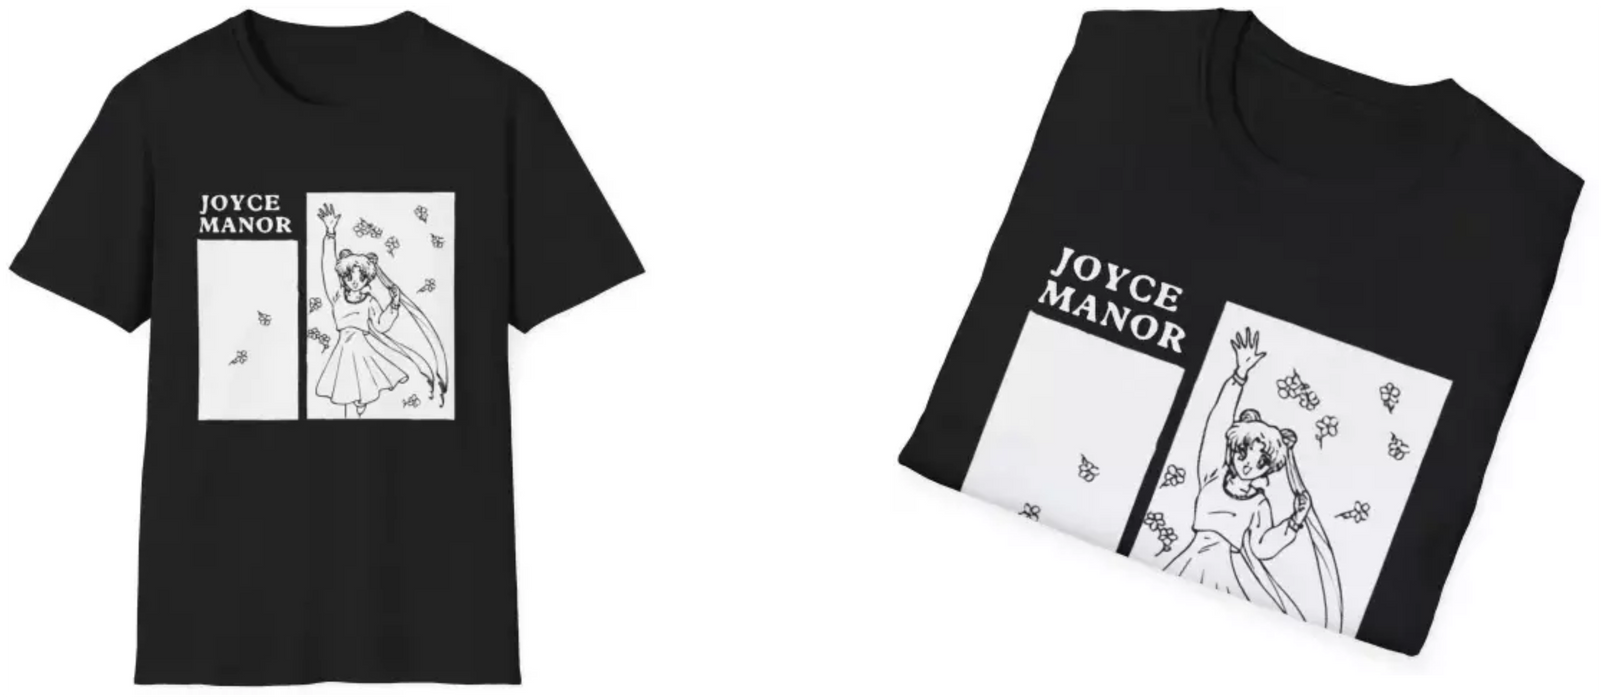 Joyce Manor Sailormoon T-Shirt